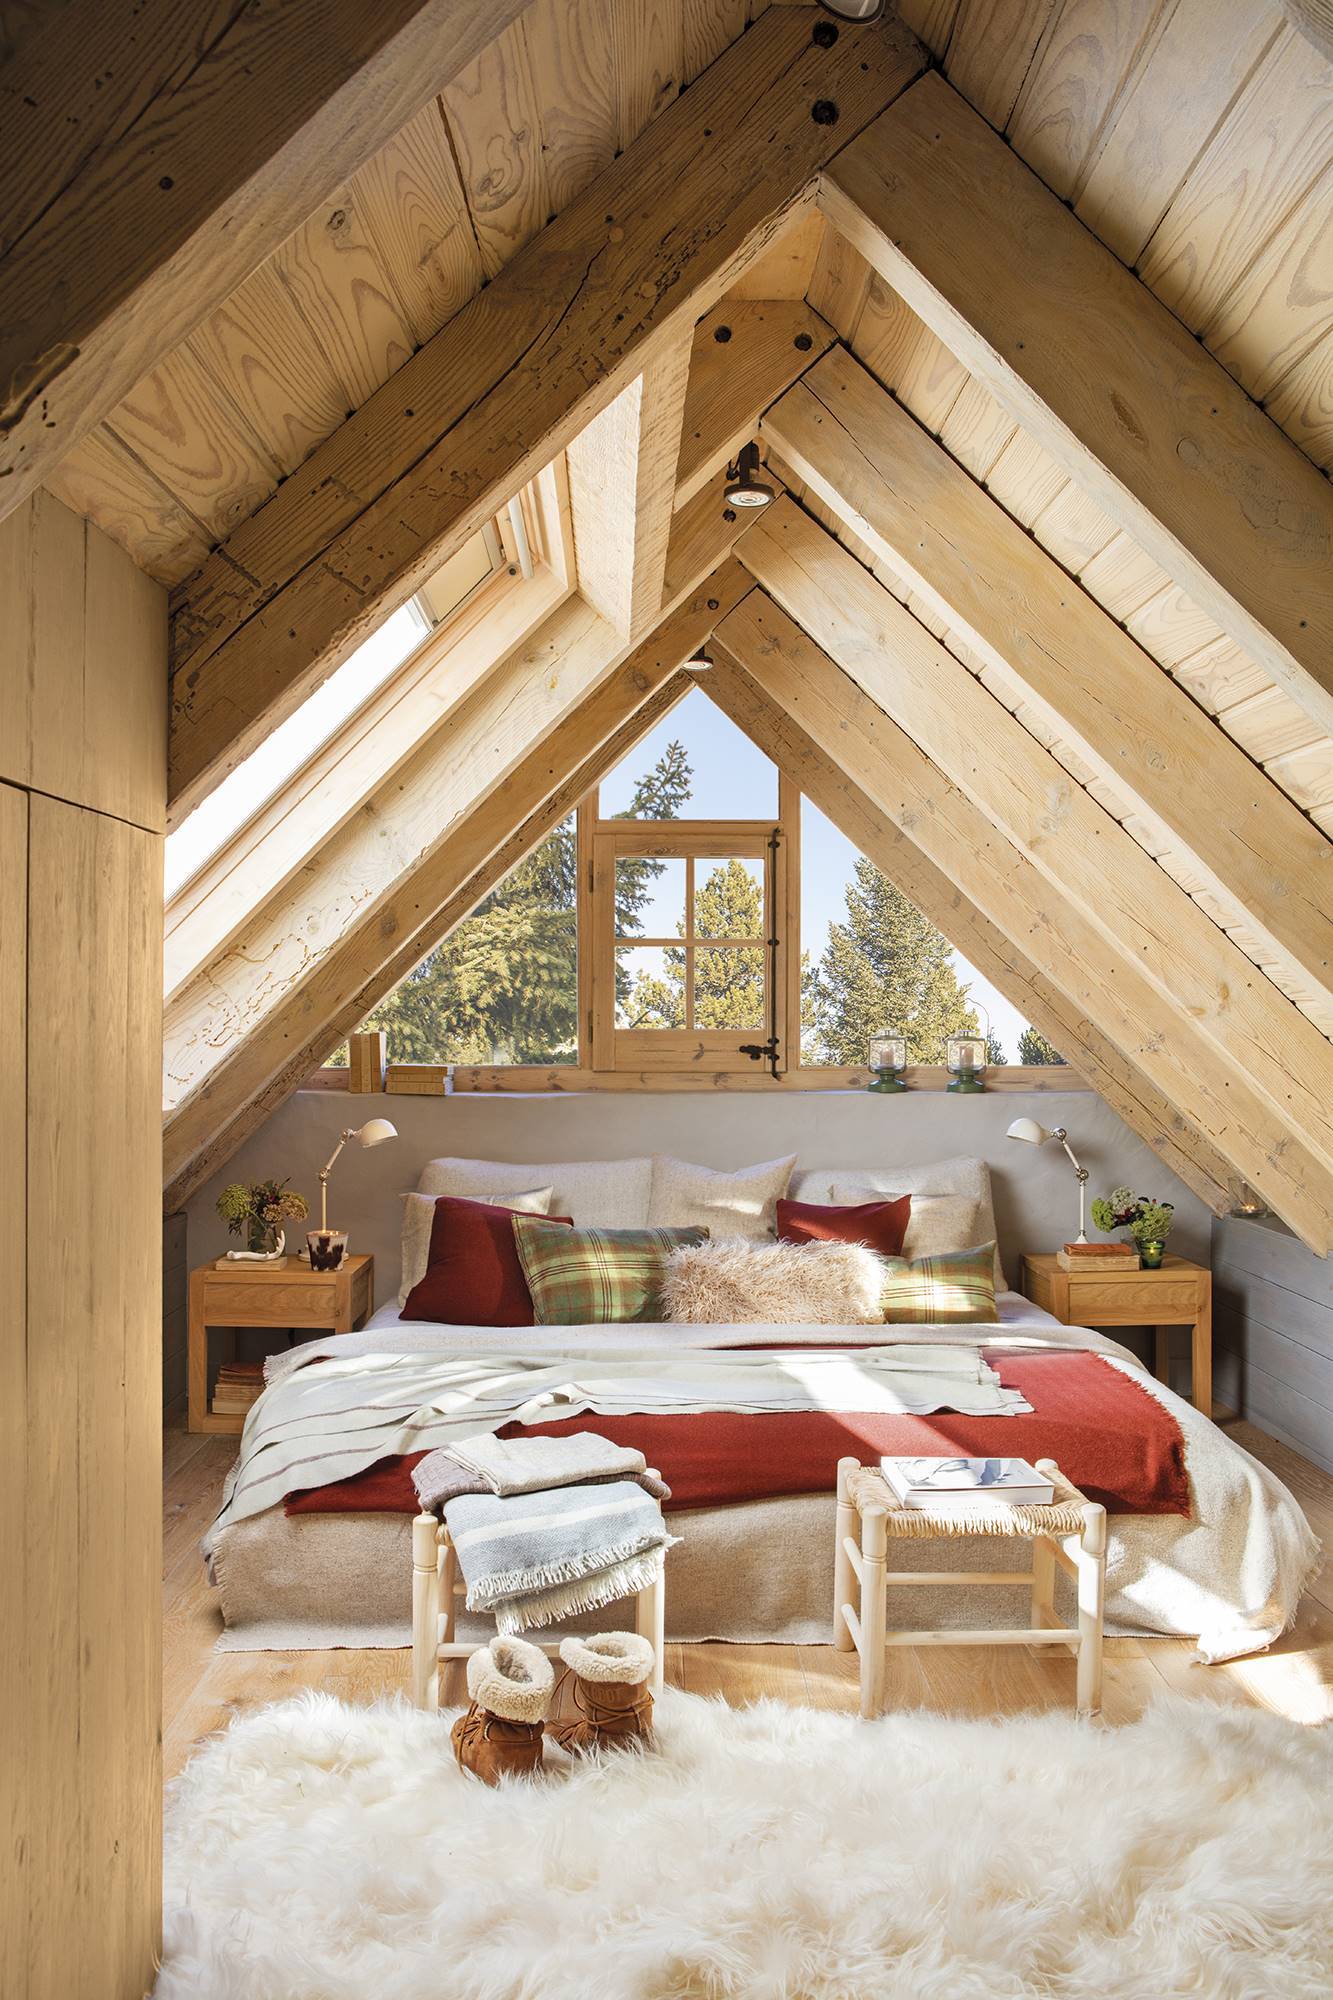 Dormitorio abuhardillado revestido de madera.